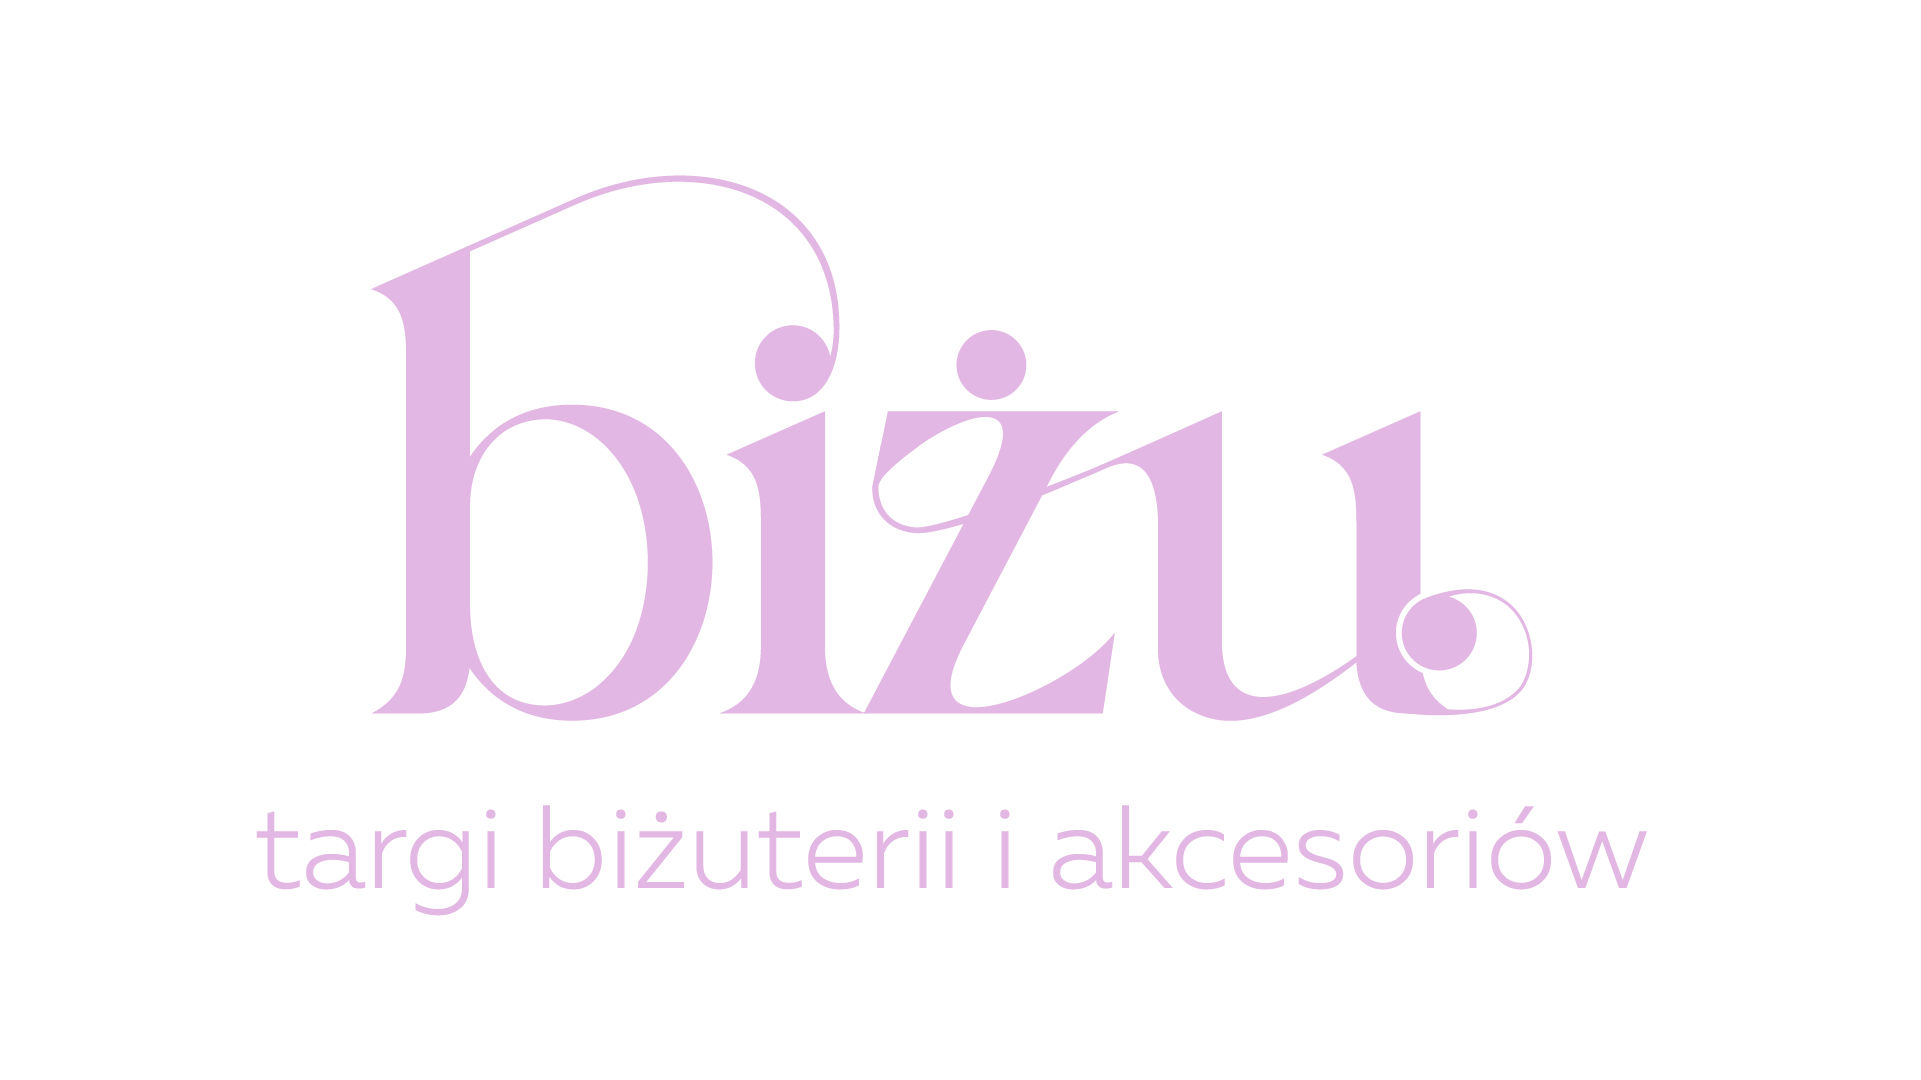 bizu logo